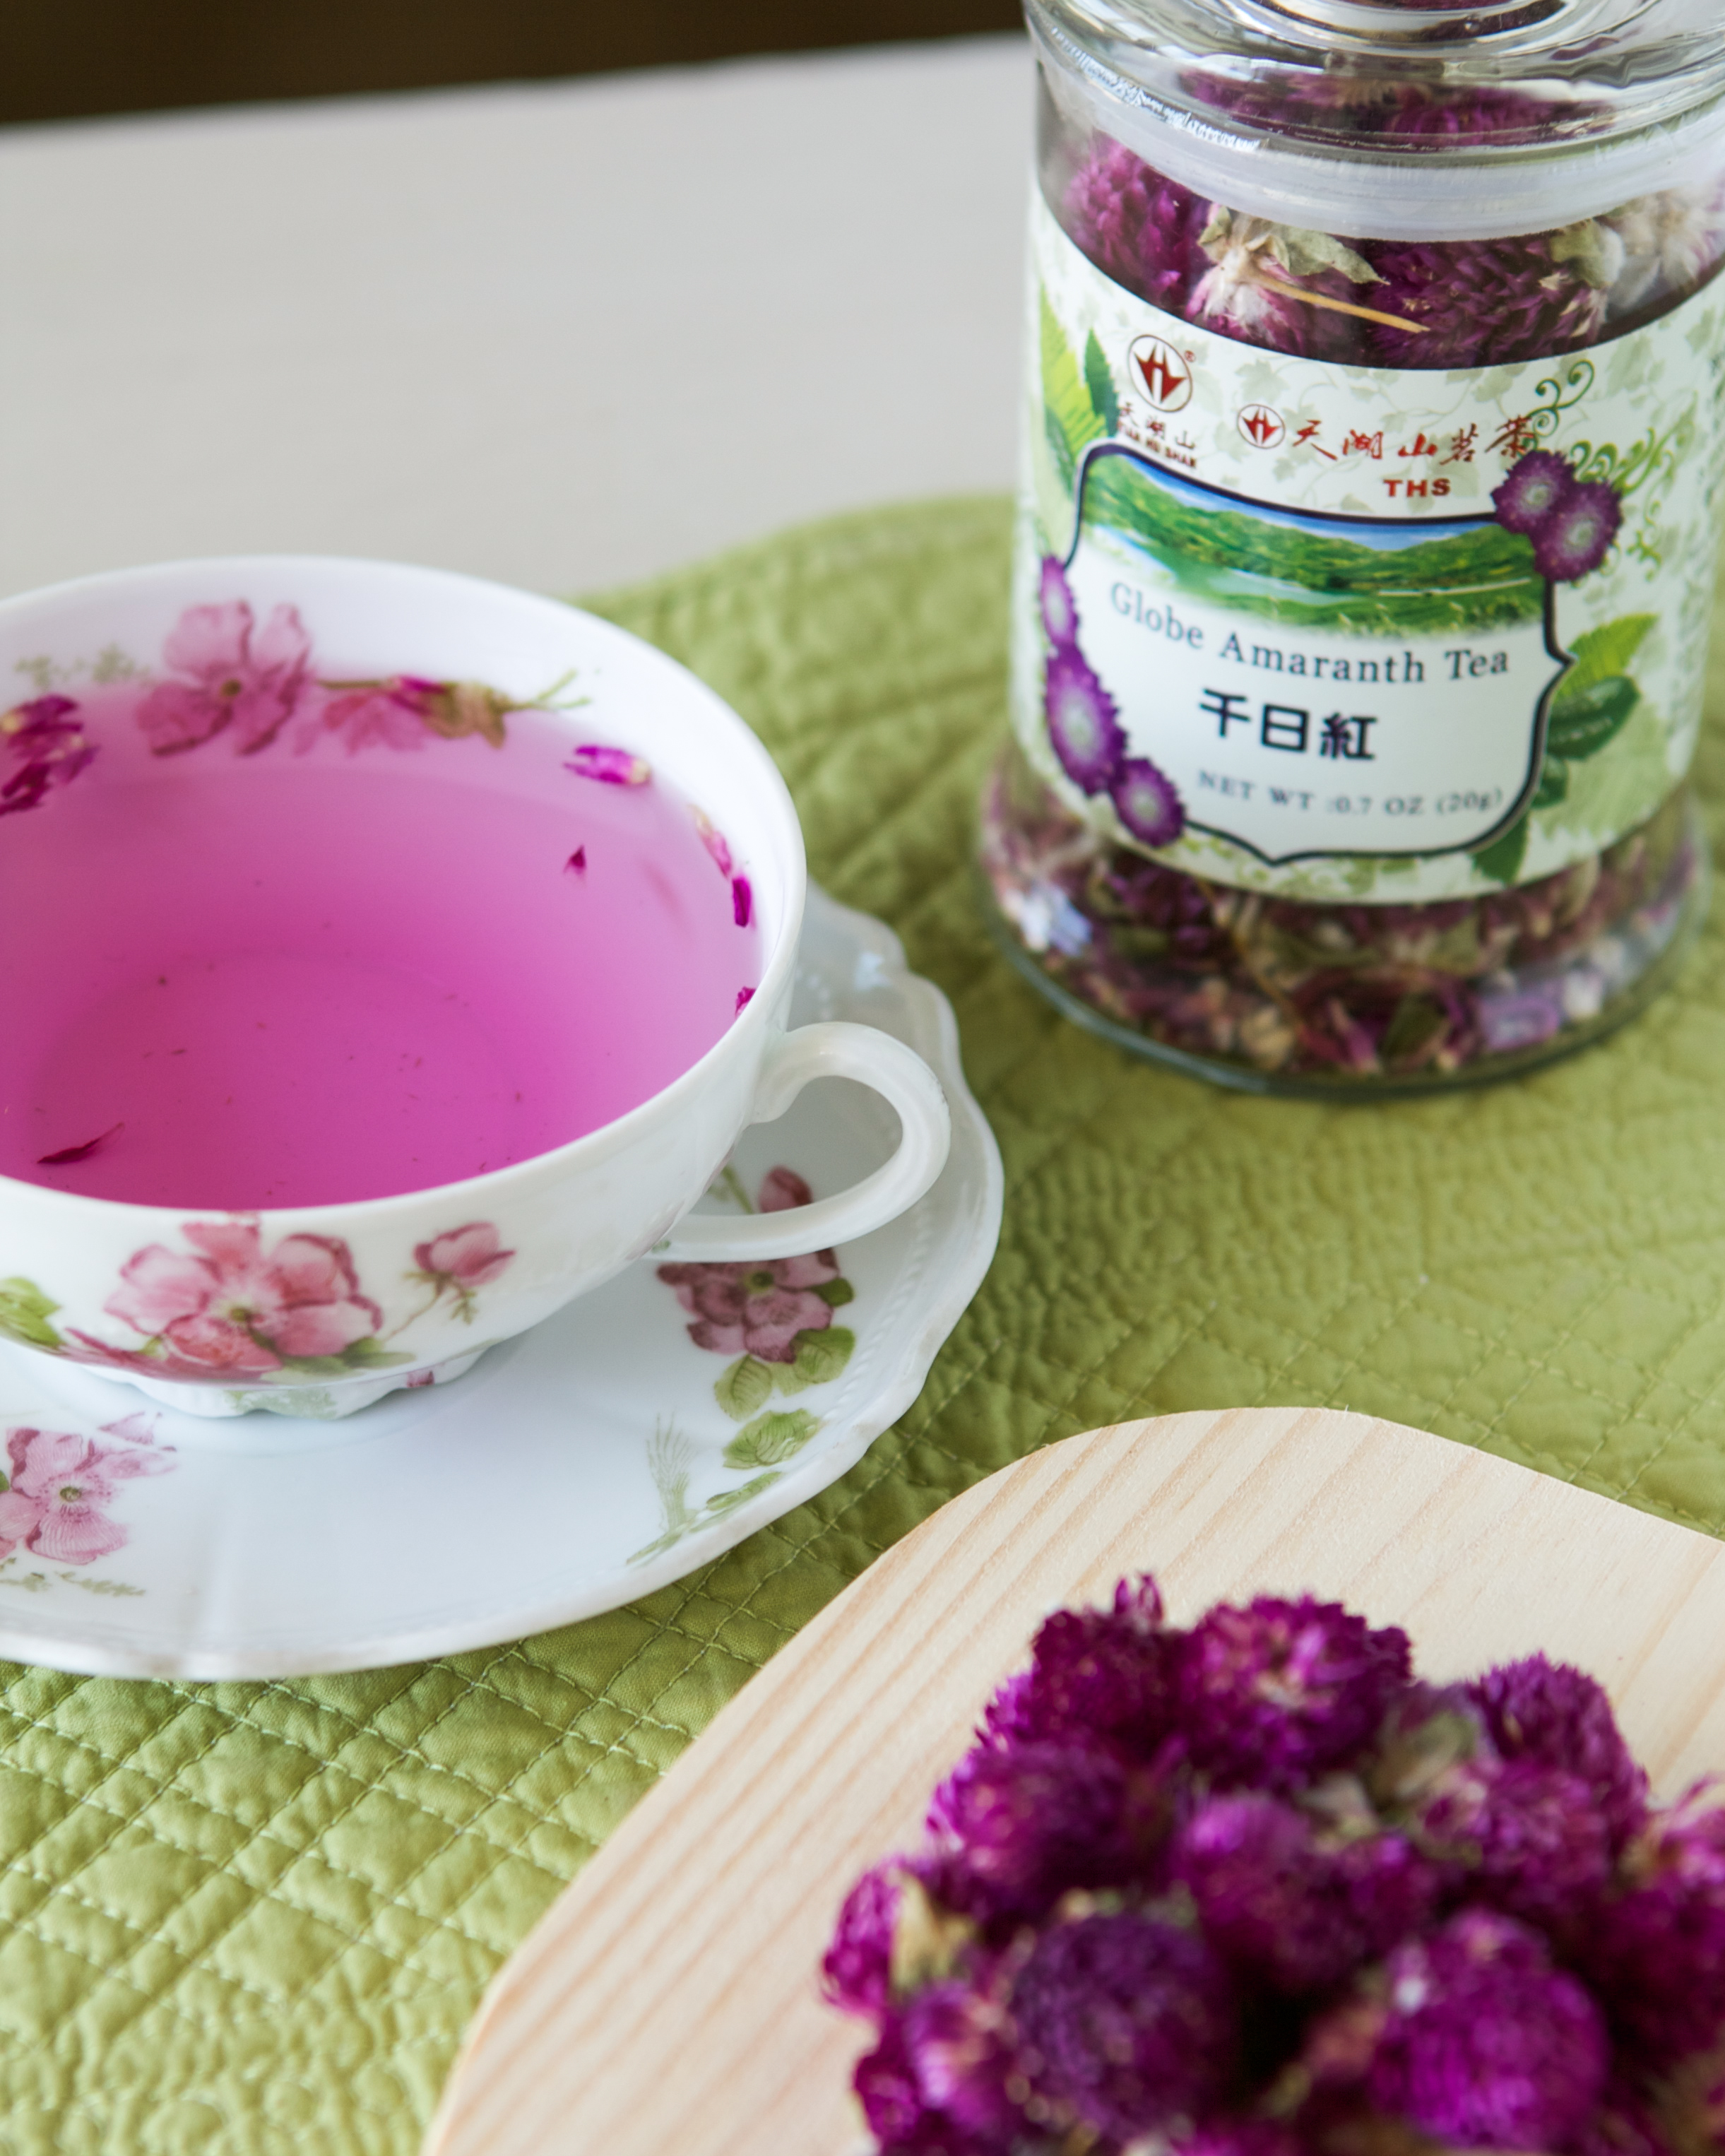 Thirsty For Tea Tian Hu Shan S Globe Amaranth Tea